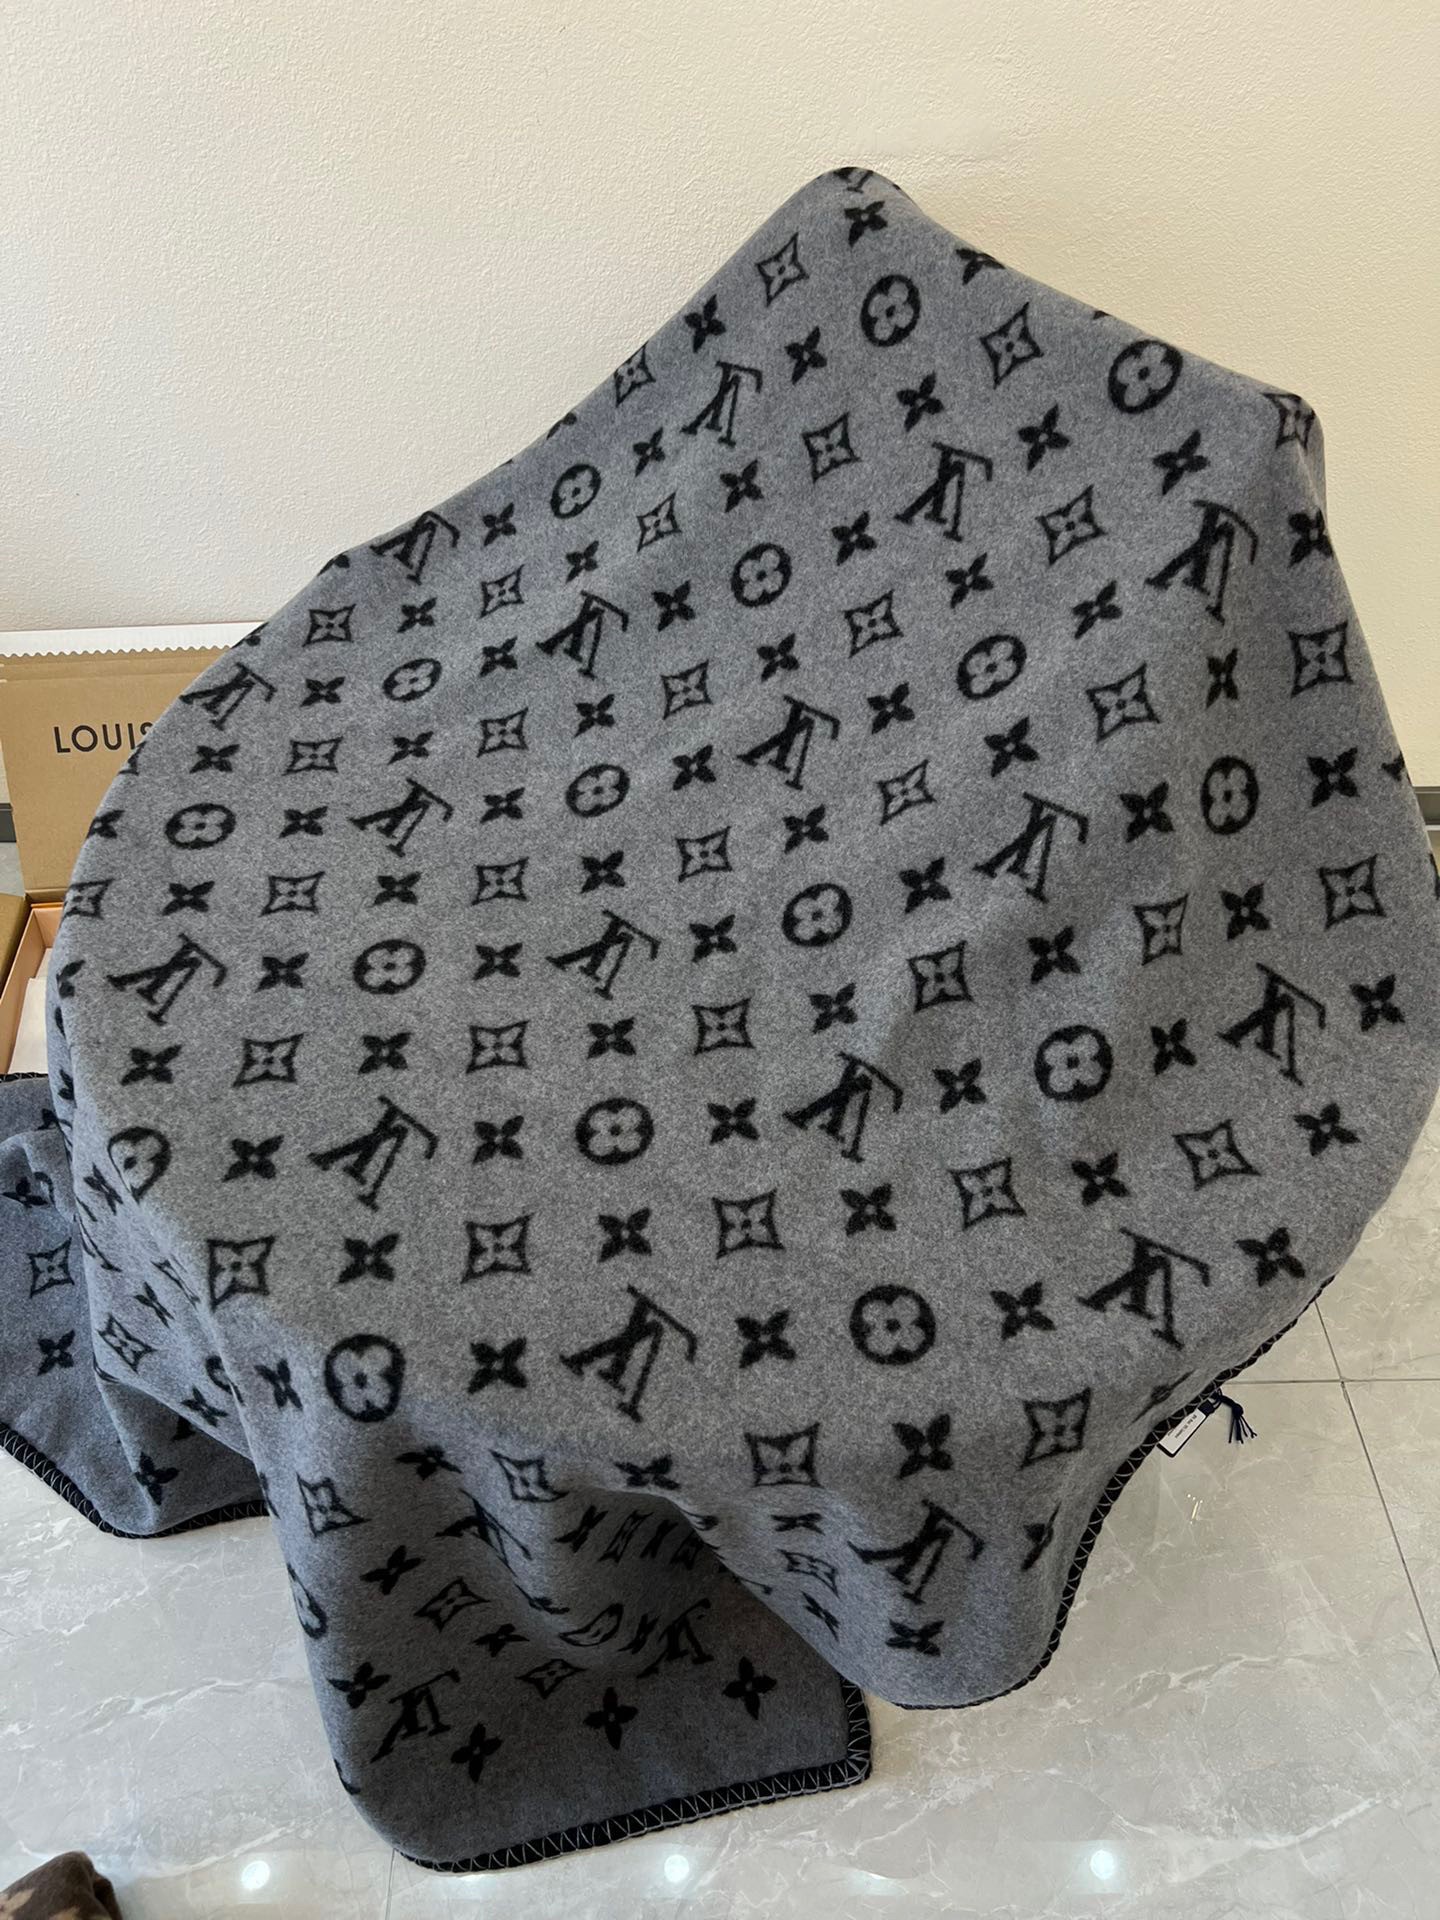 Neo Monogram Blanket - M70439